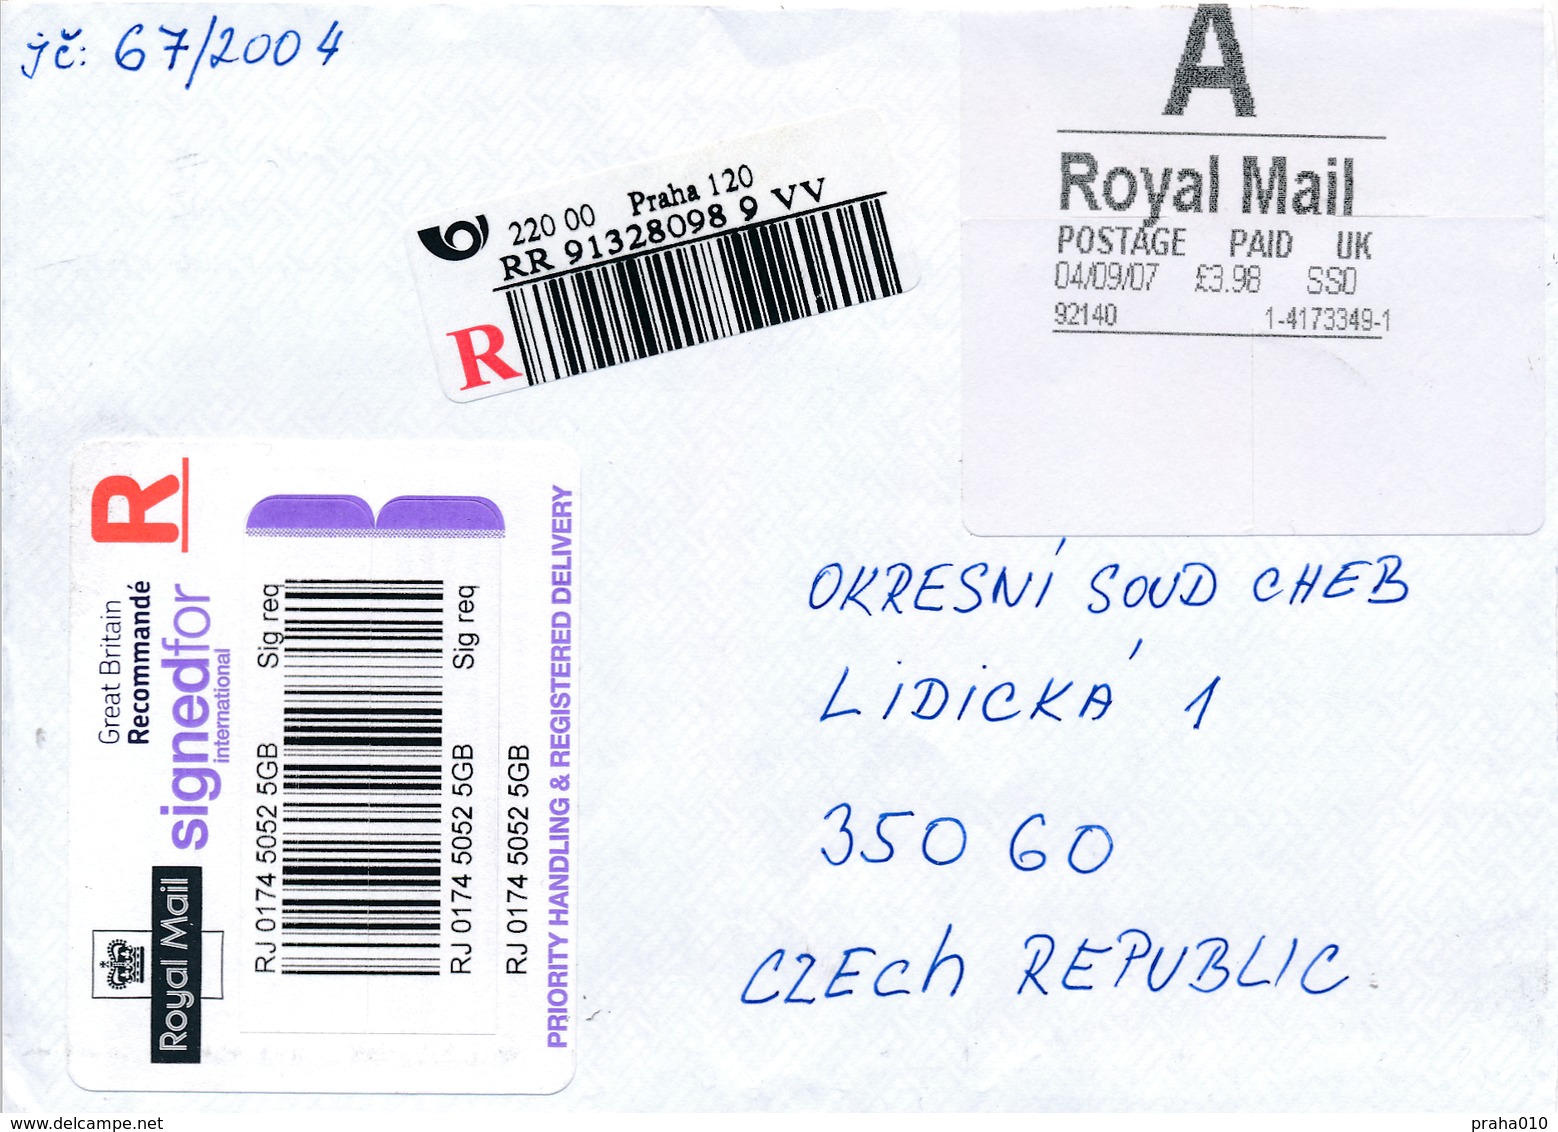 N0549 - Great Britain / Czech Rep. (2007) R-letter (R-label UK / Spec. R-label CR) 220 00 Praha 120 - Covers & Documents